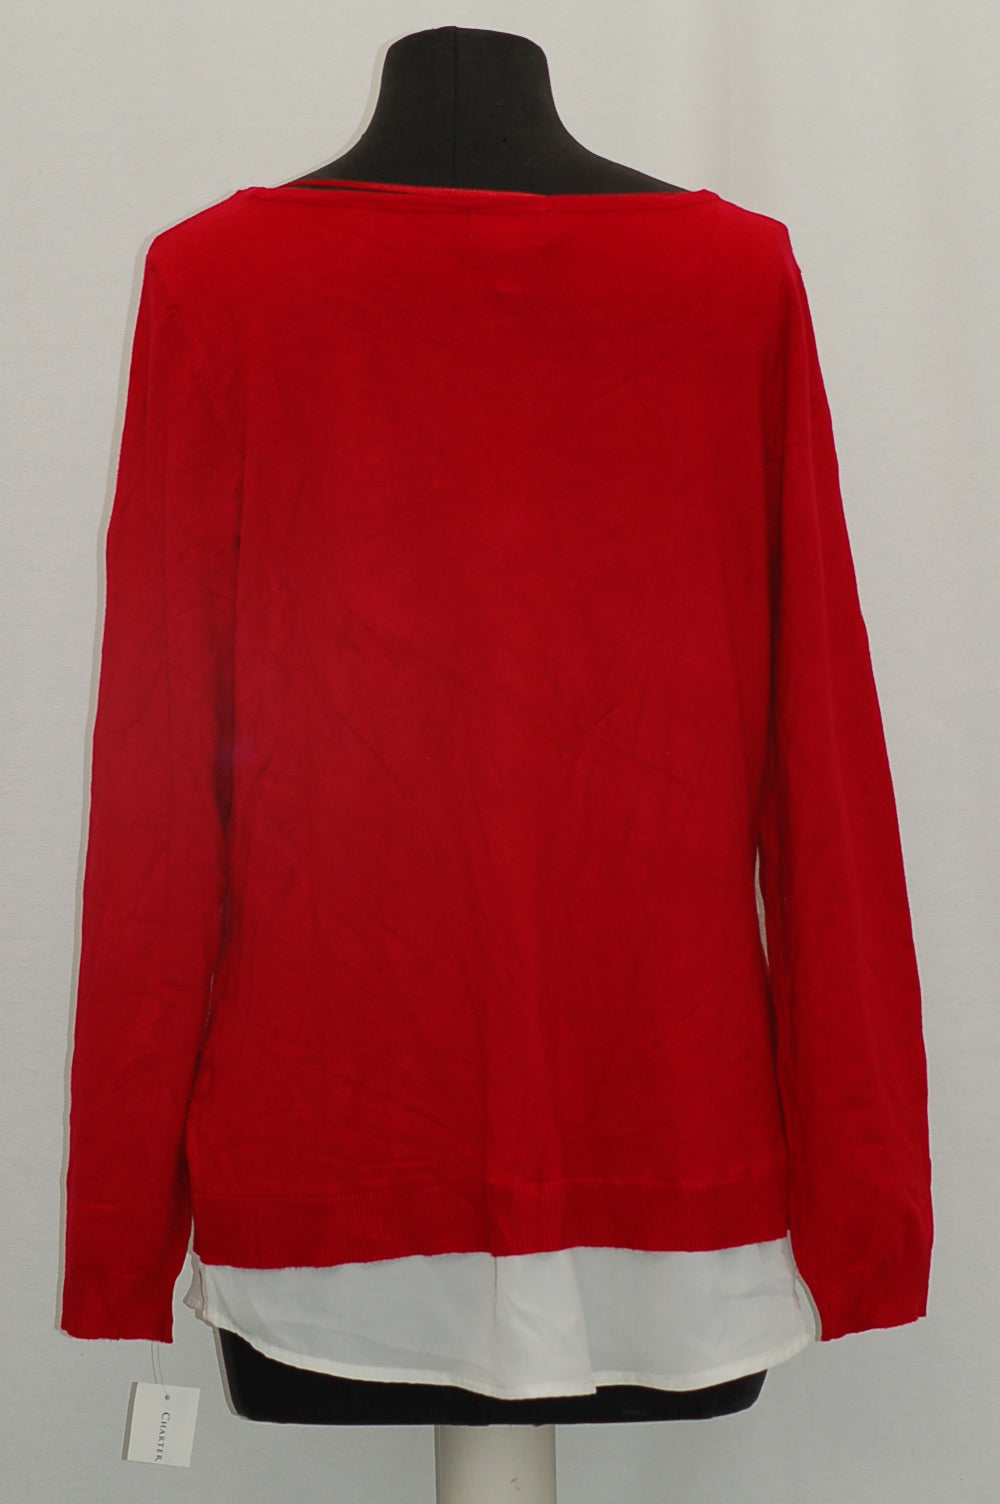 Charter Club Layered-Look Brooch Sweater New Red Amore M akrutinirali